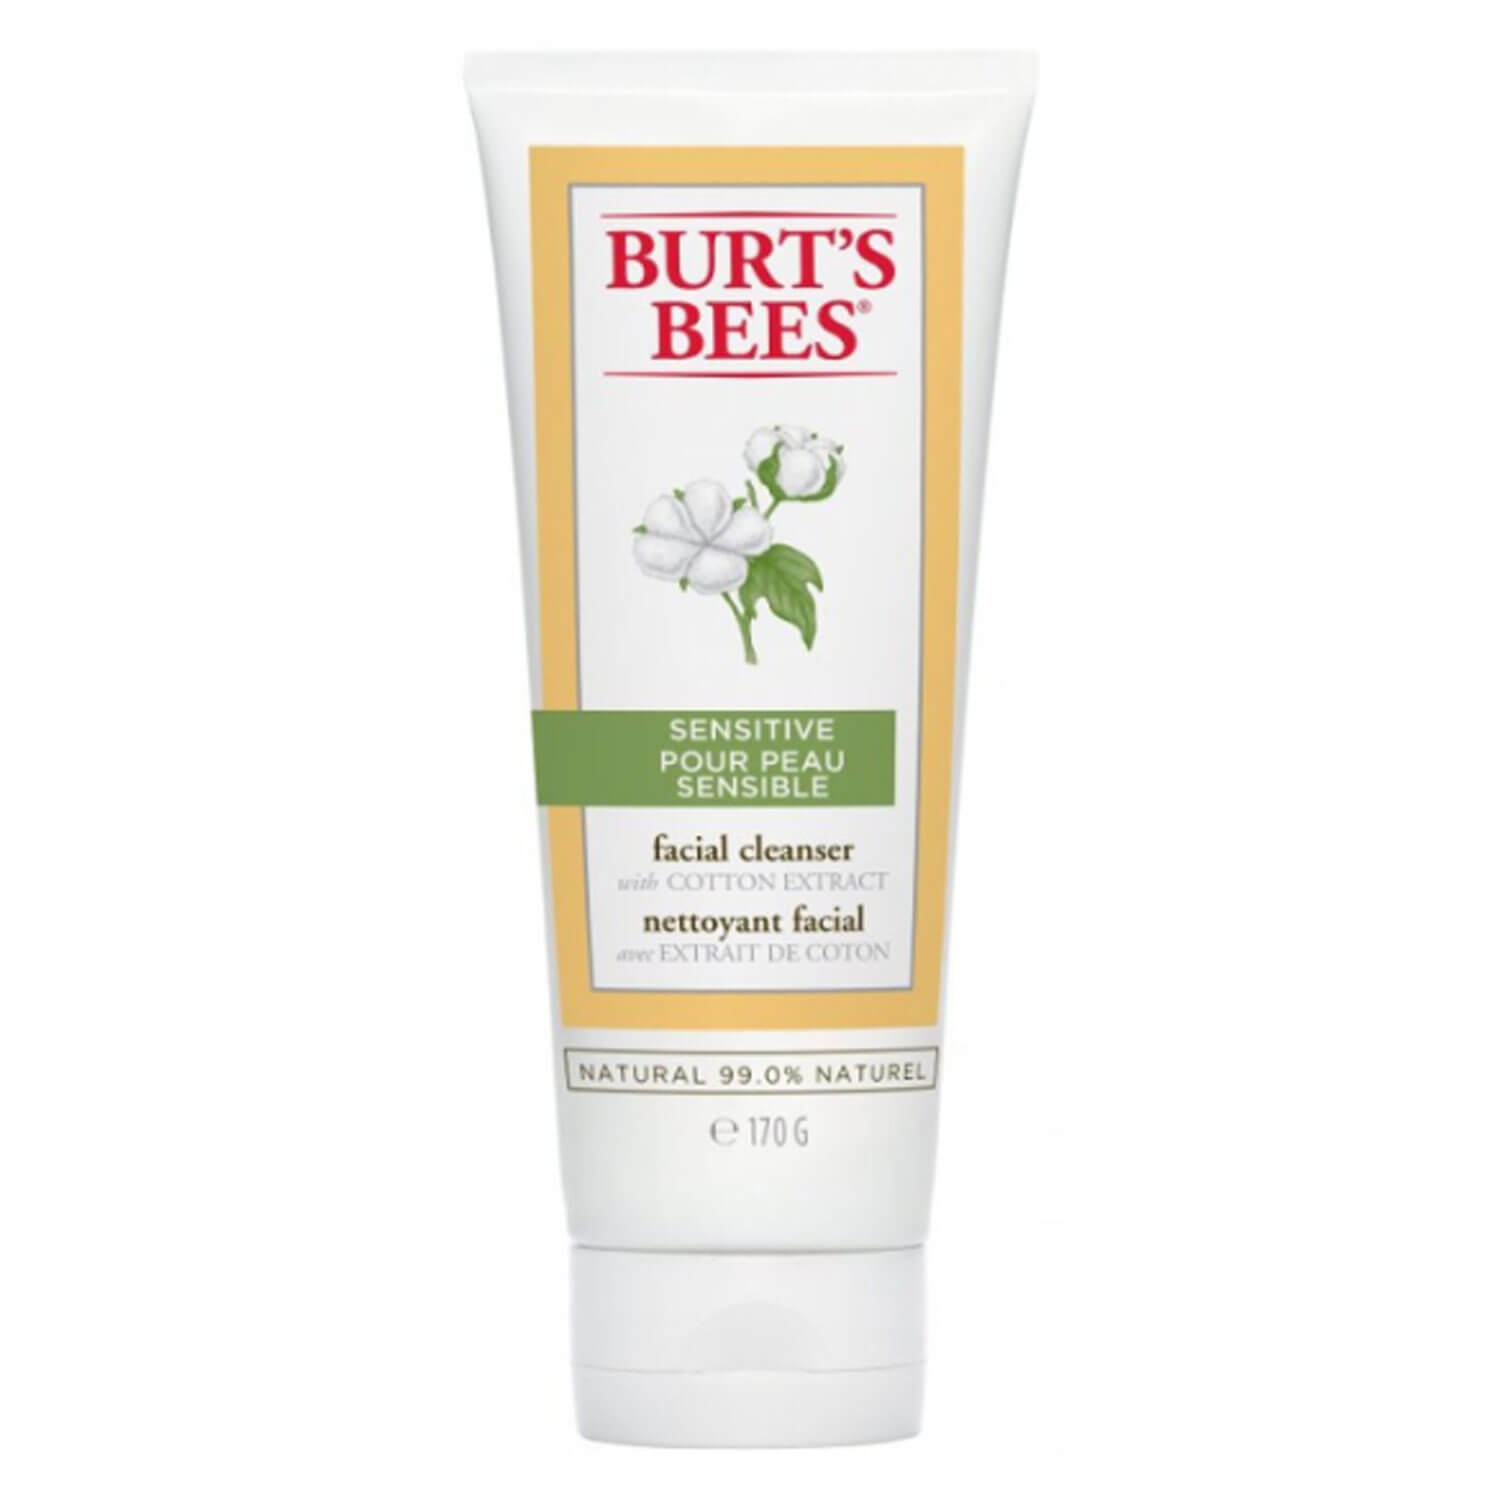 Produktbild von Burt's Bees - Sensitive Facial Cleanser Cotton Extract